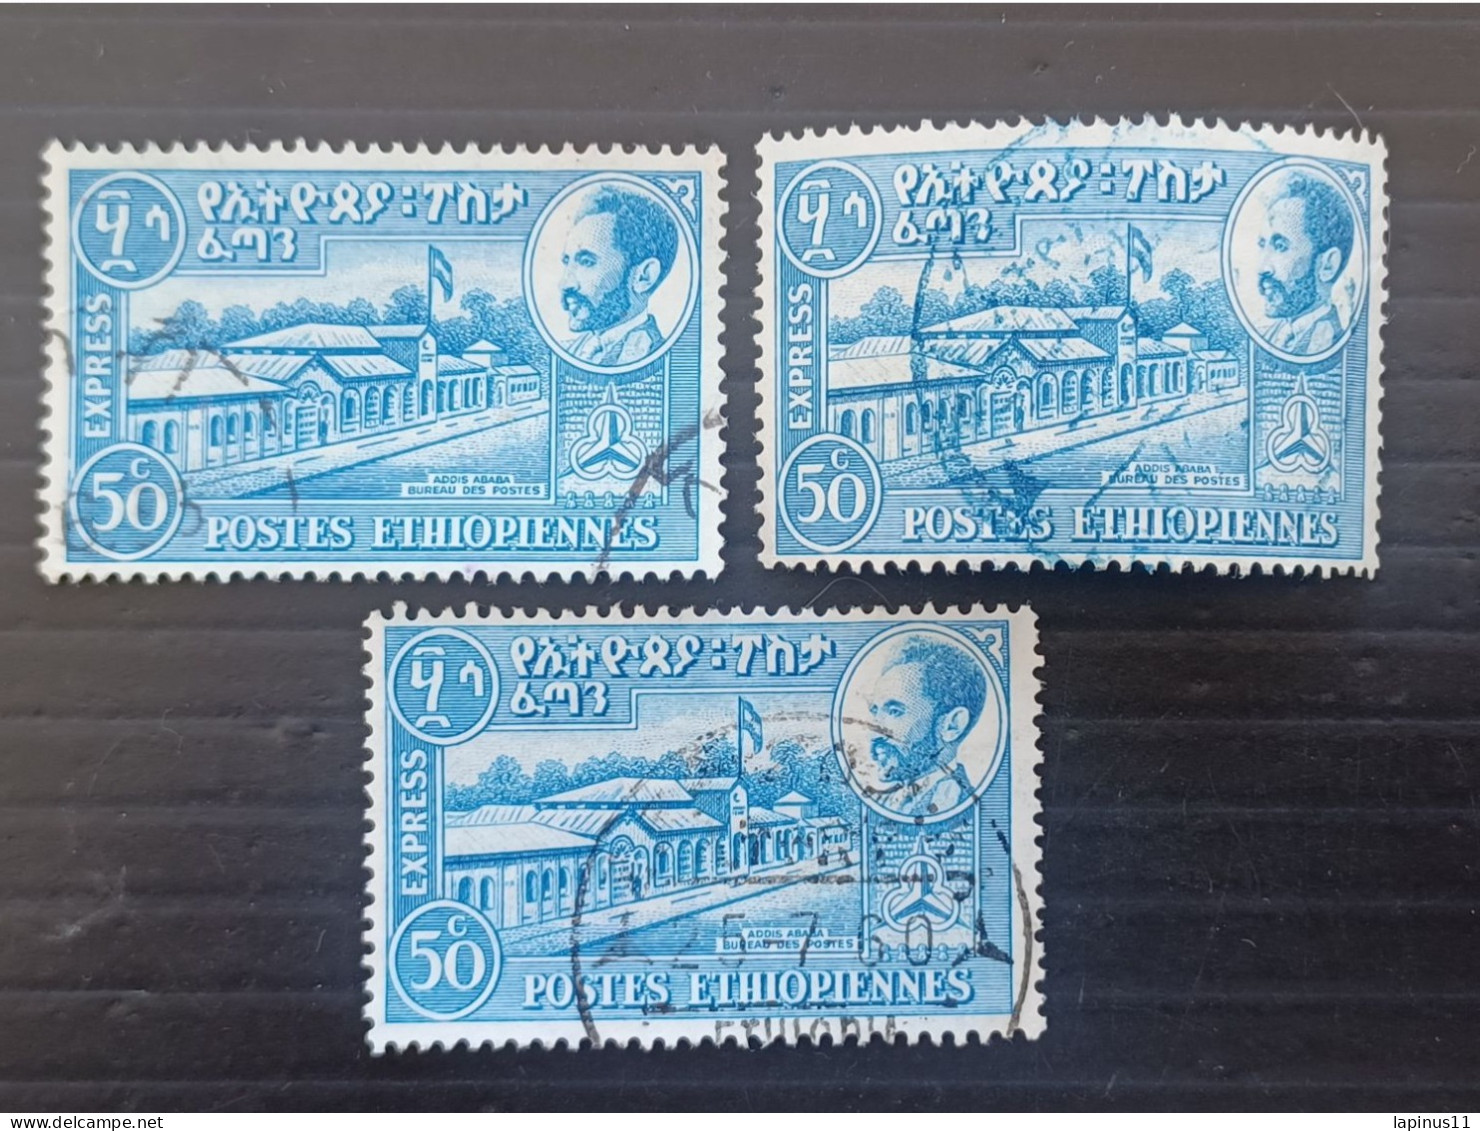 ETIOPIA 1954 EXPRESS STAMPS YVERT N 4 EXCEPTIONAL "A" WATERMARK POSITION ERROR INVERTED - Ethiopie